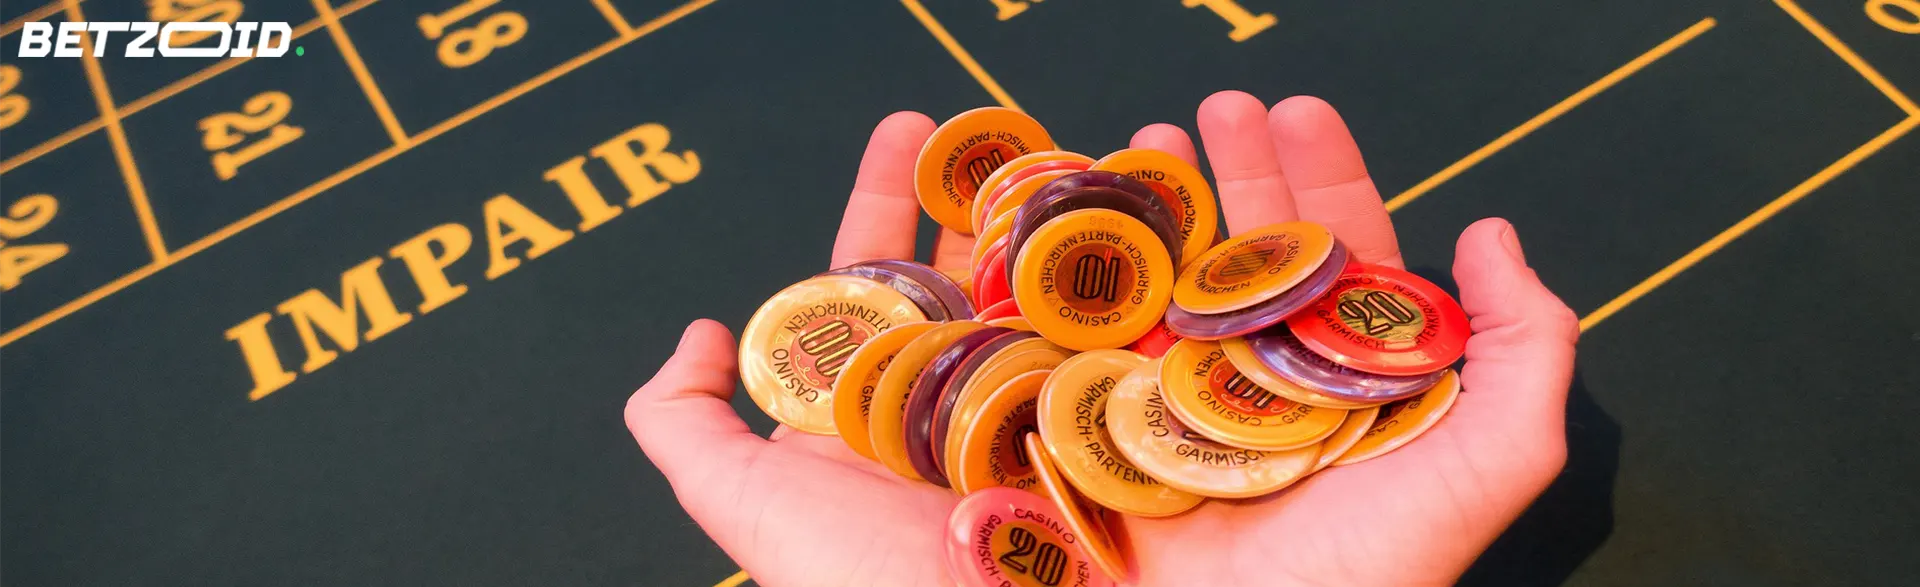 25 free spins no deposit mobile casinos in Australia.